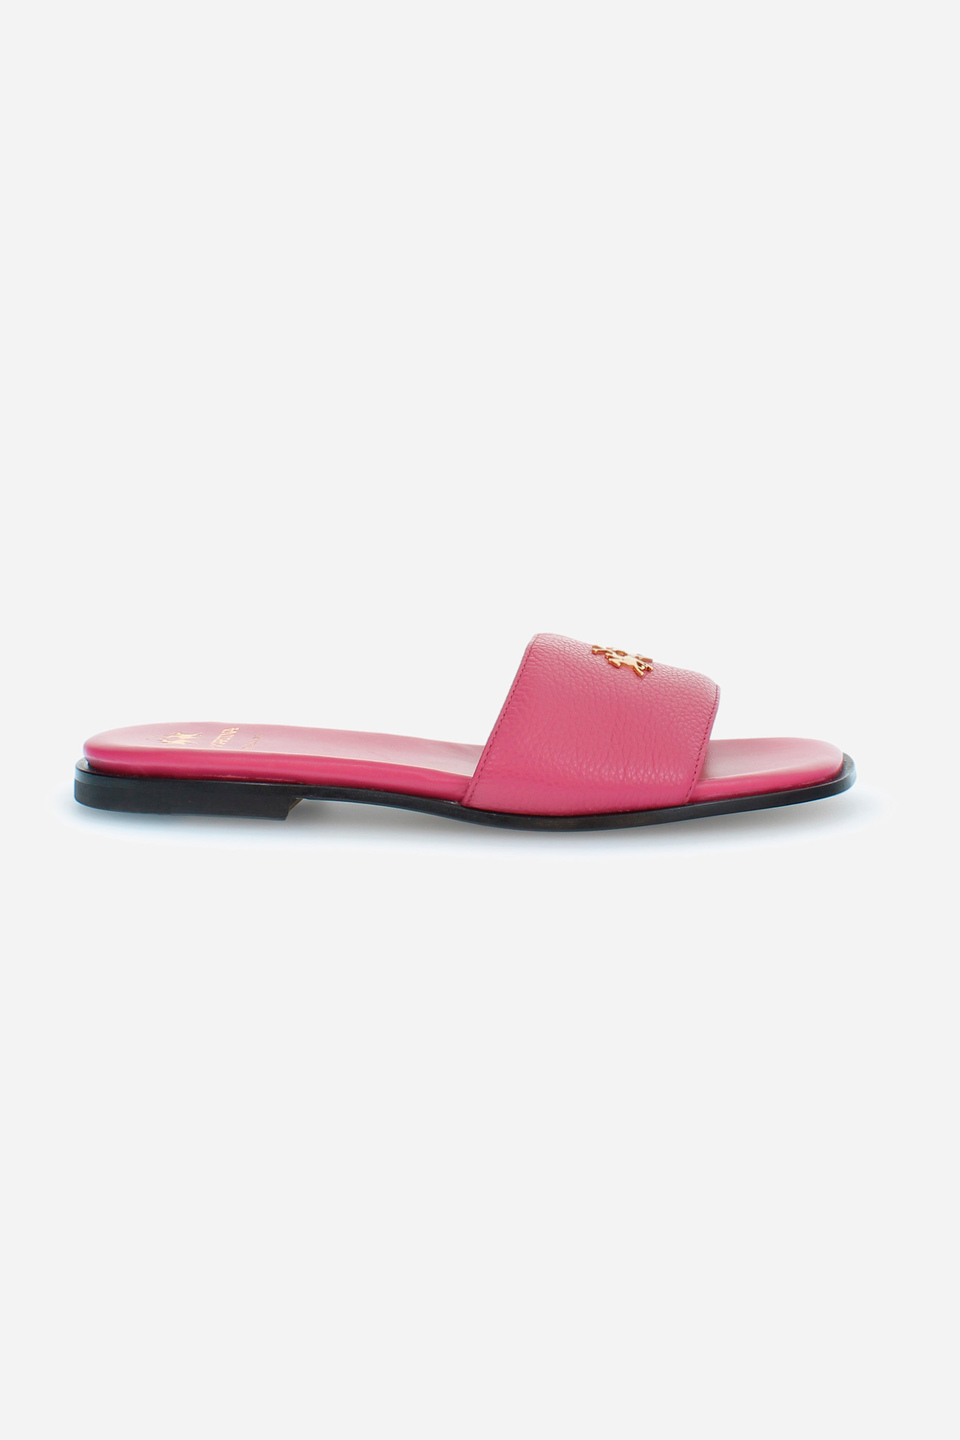 Sandalo da donna in pelle | La Martina - Official Online Shop